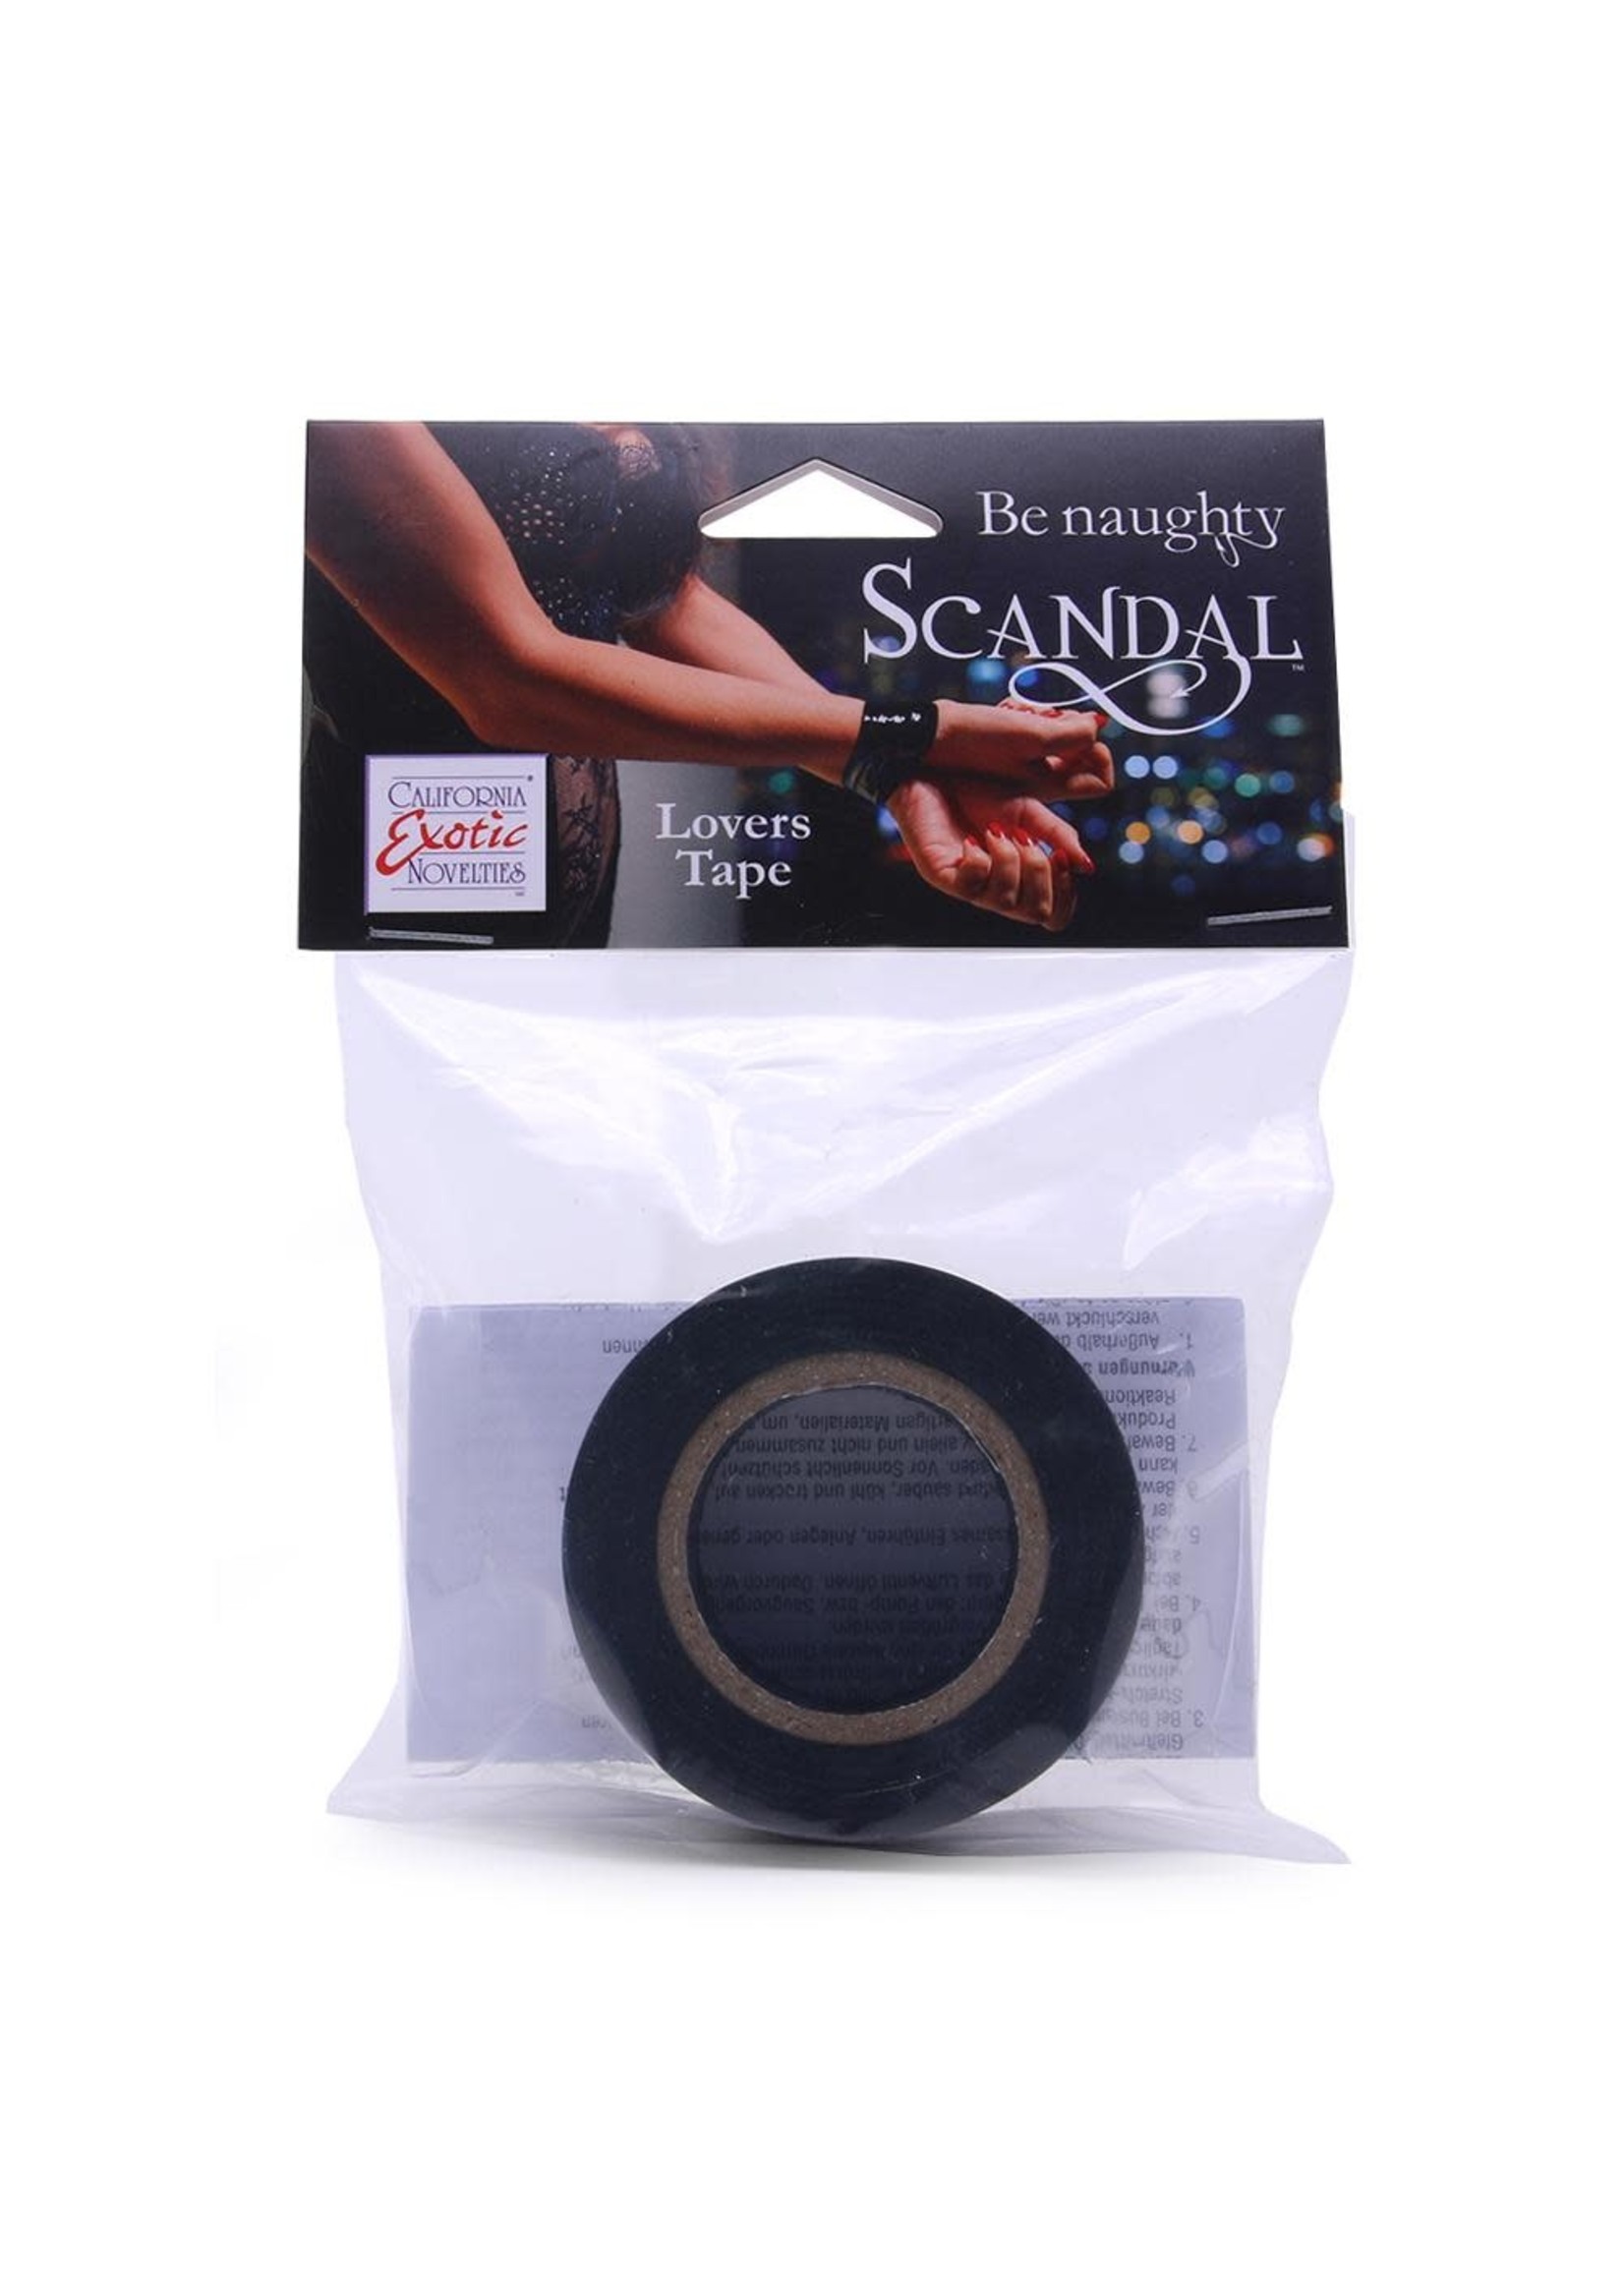 Scandal Lovers Tape in Black